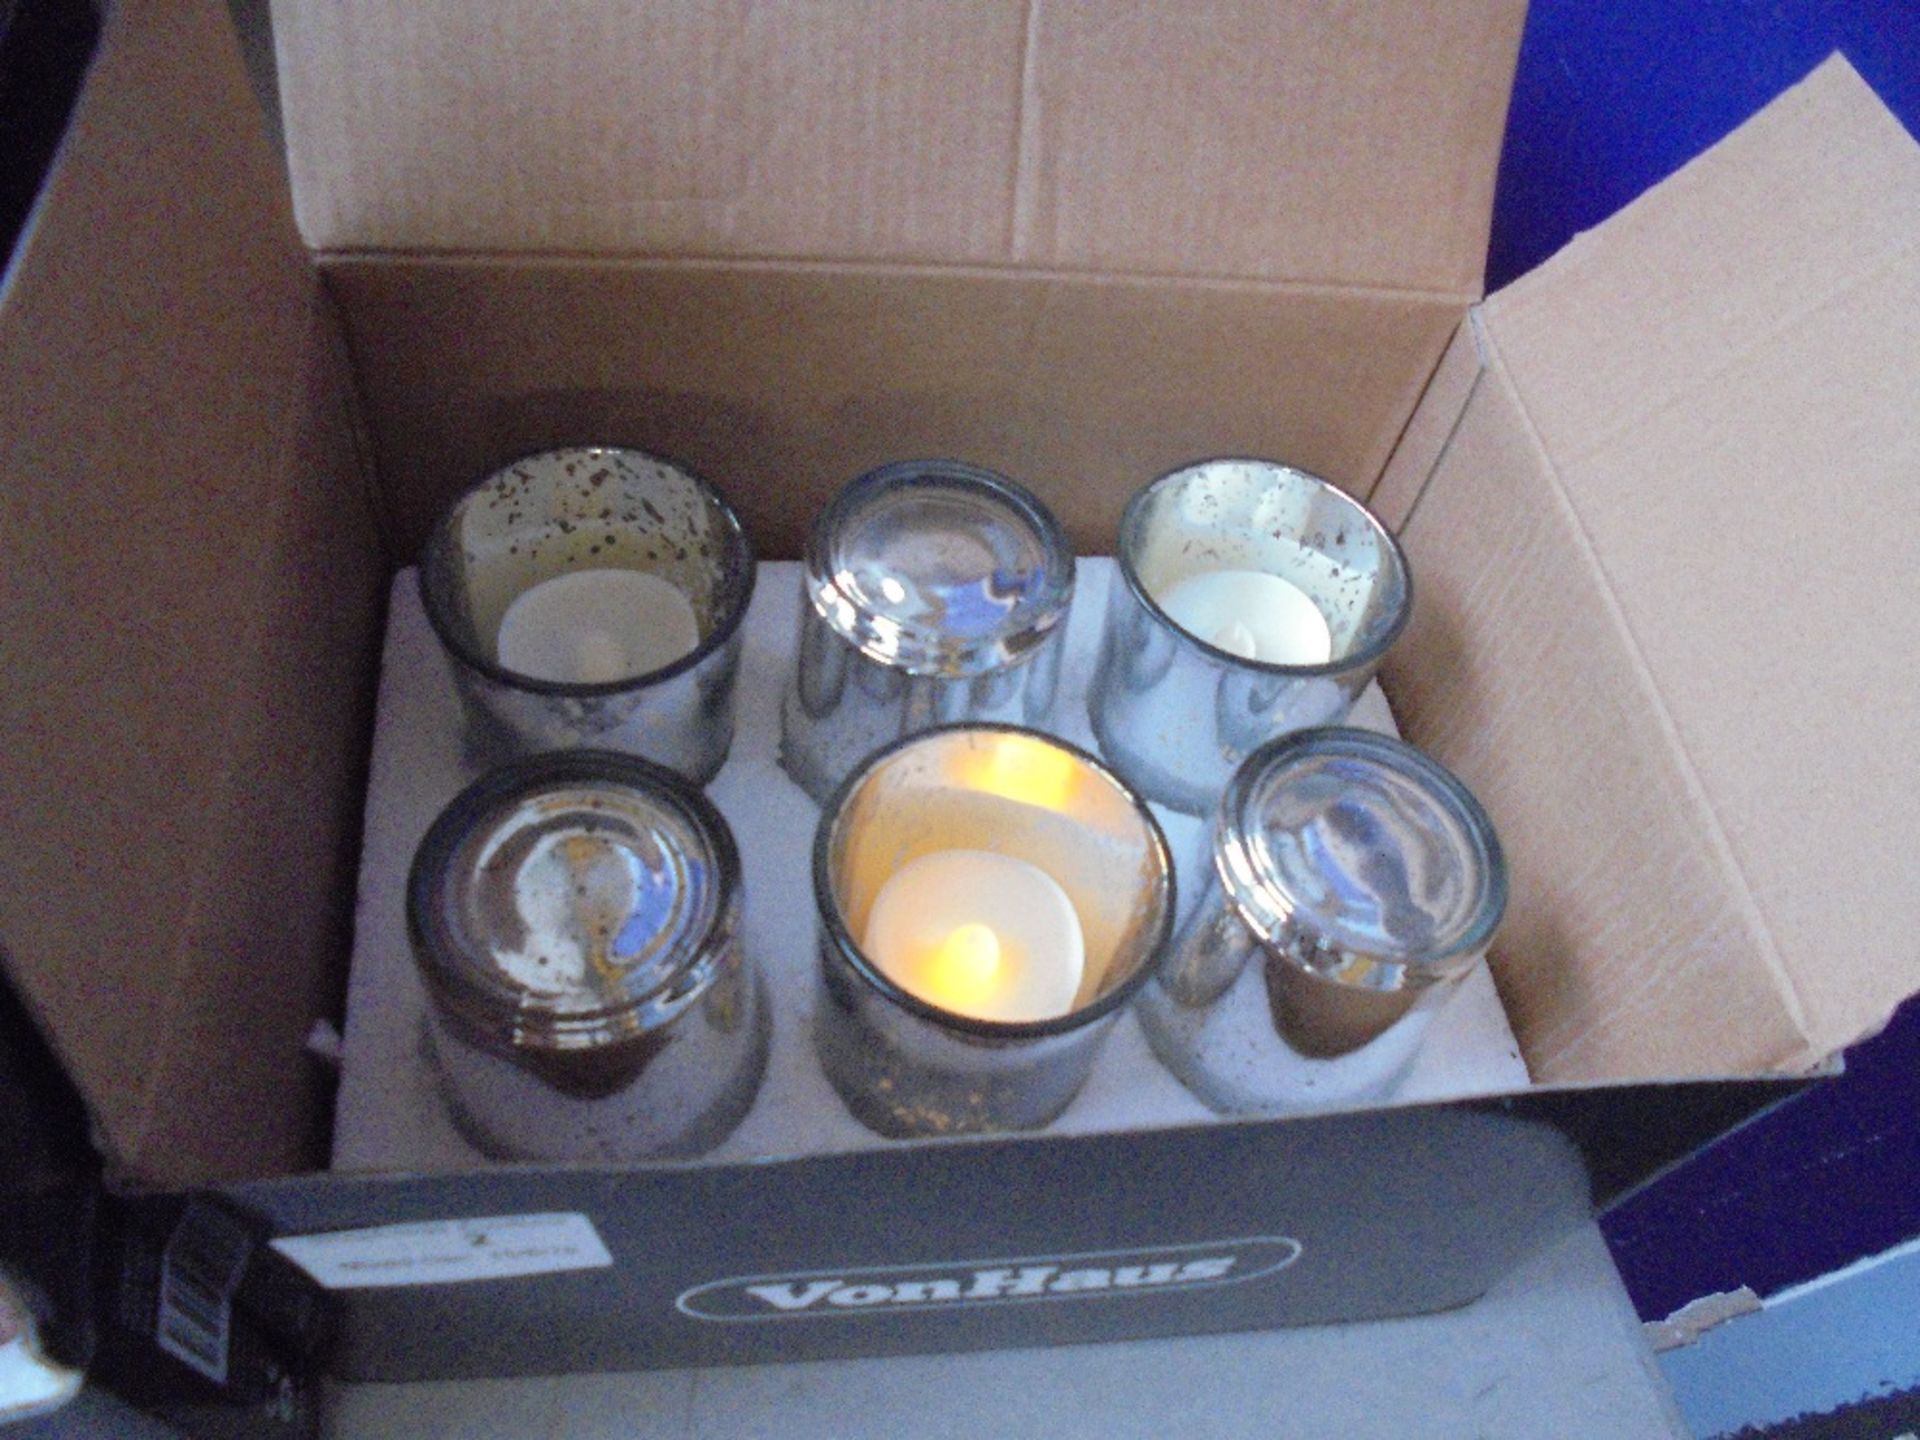 Set of 6 piece silver glass holder & LED tea light set new & boxed